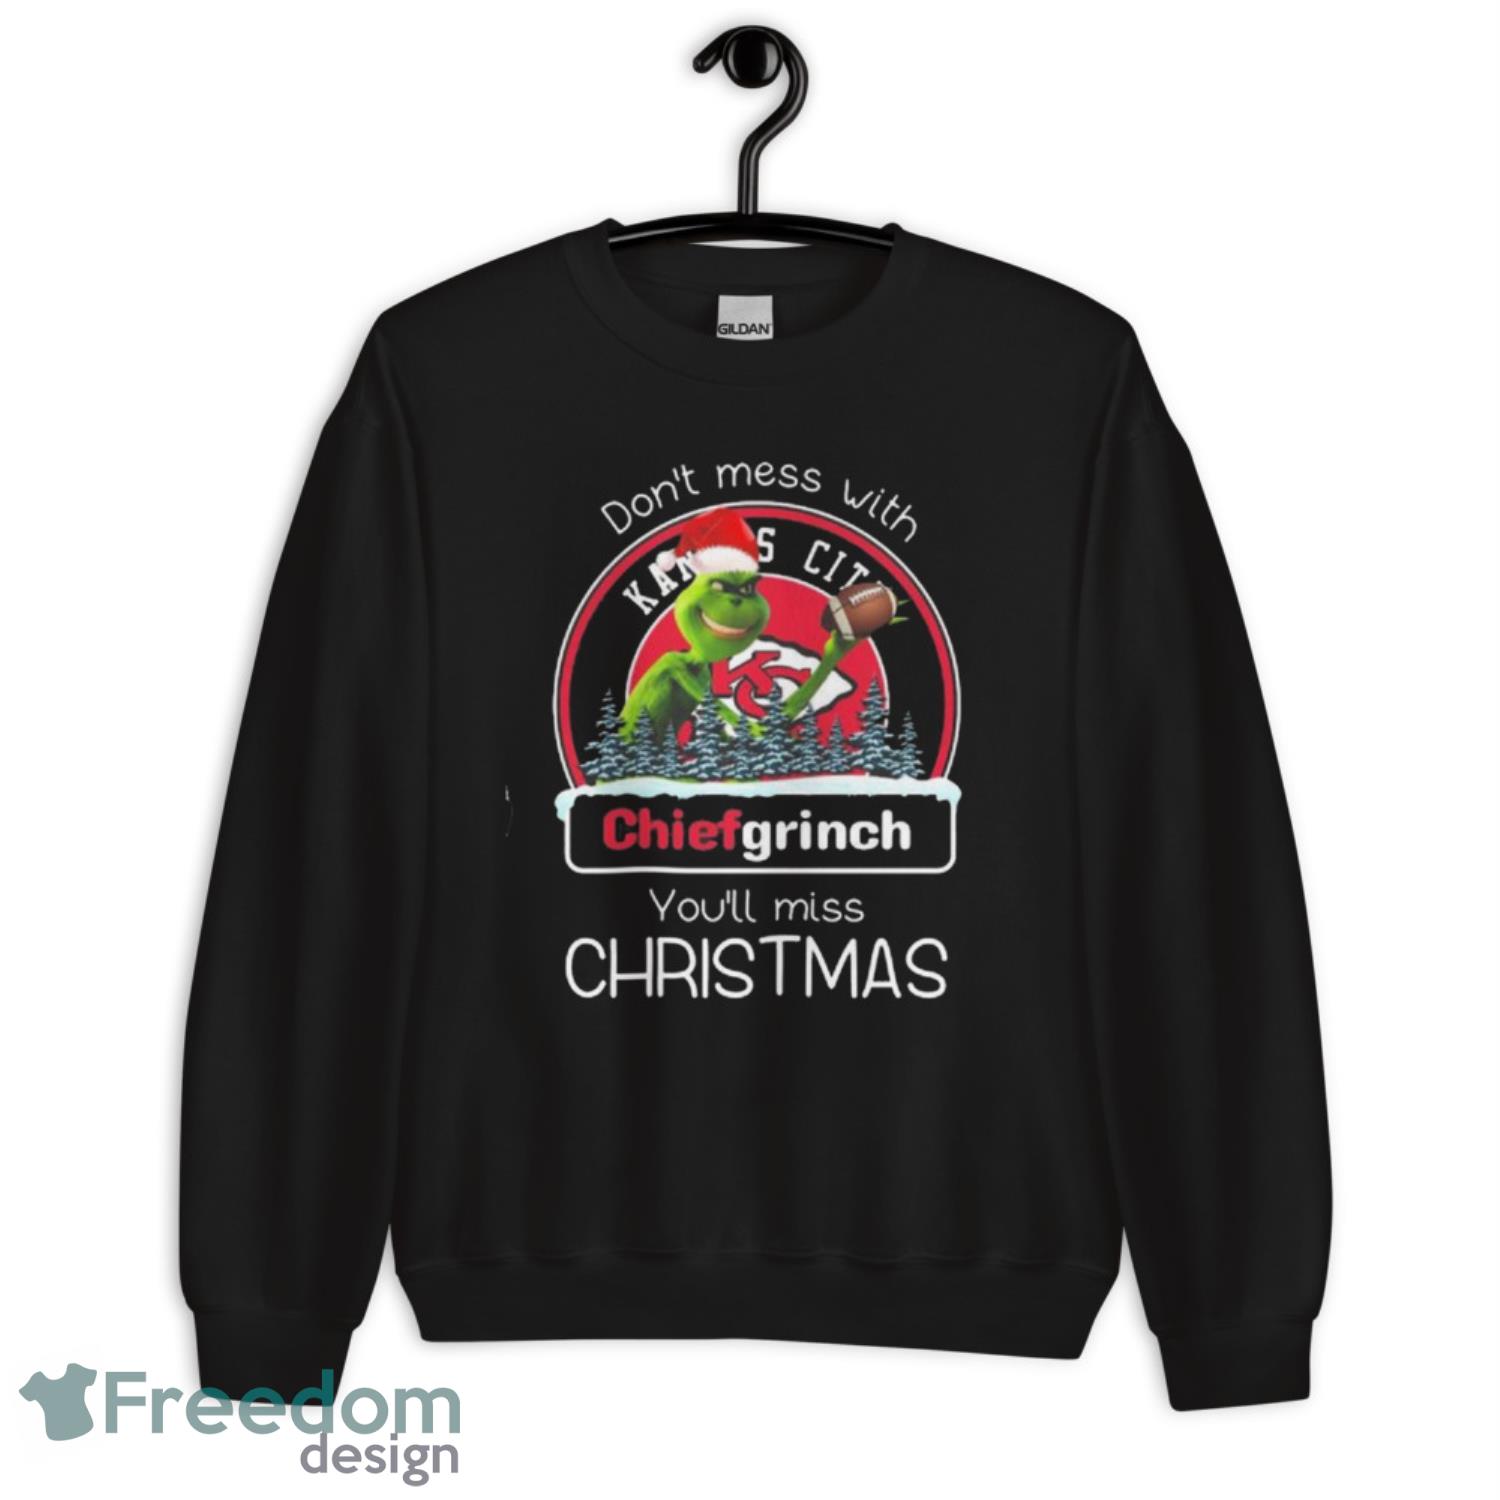 Kansas City Chiefs Grinch Santa Don’t mess with Chiefs Grinch You’ll miss Christmas Shirt - G185 Unisex Heavy Blend Crewneck Sweatshirt